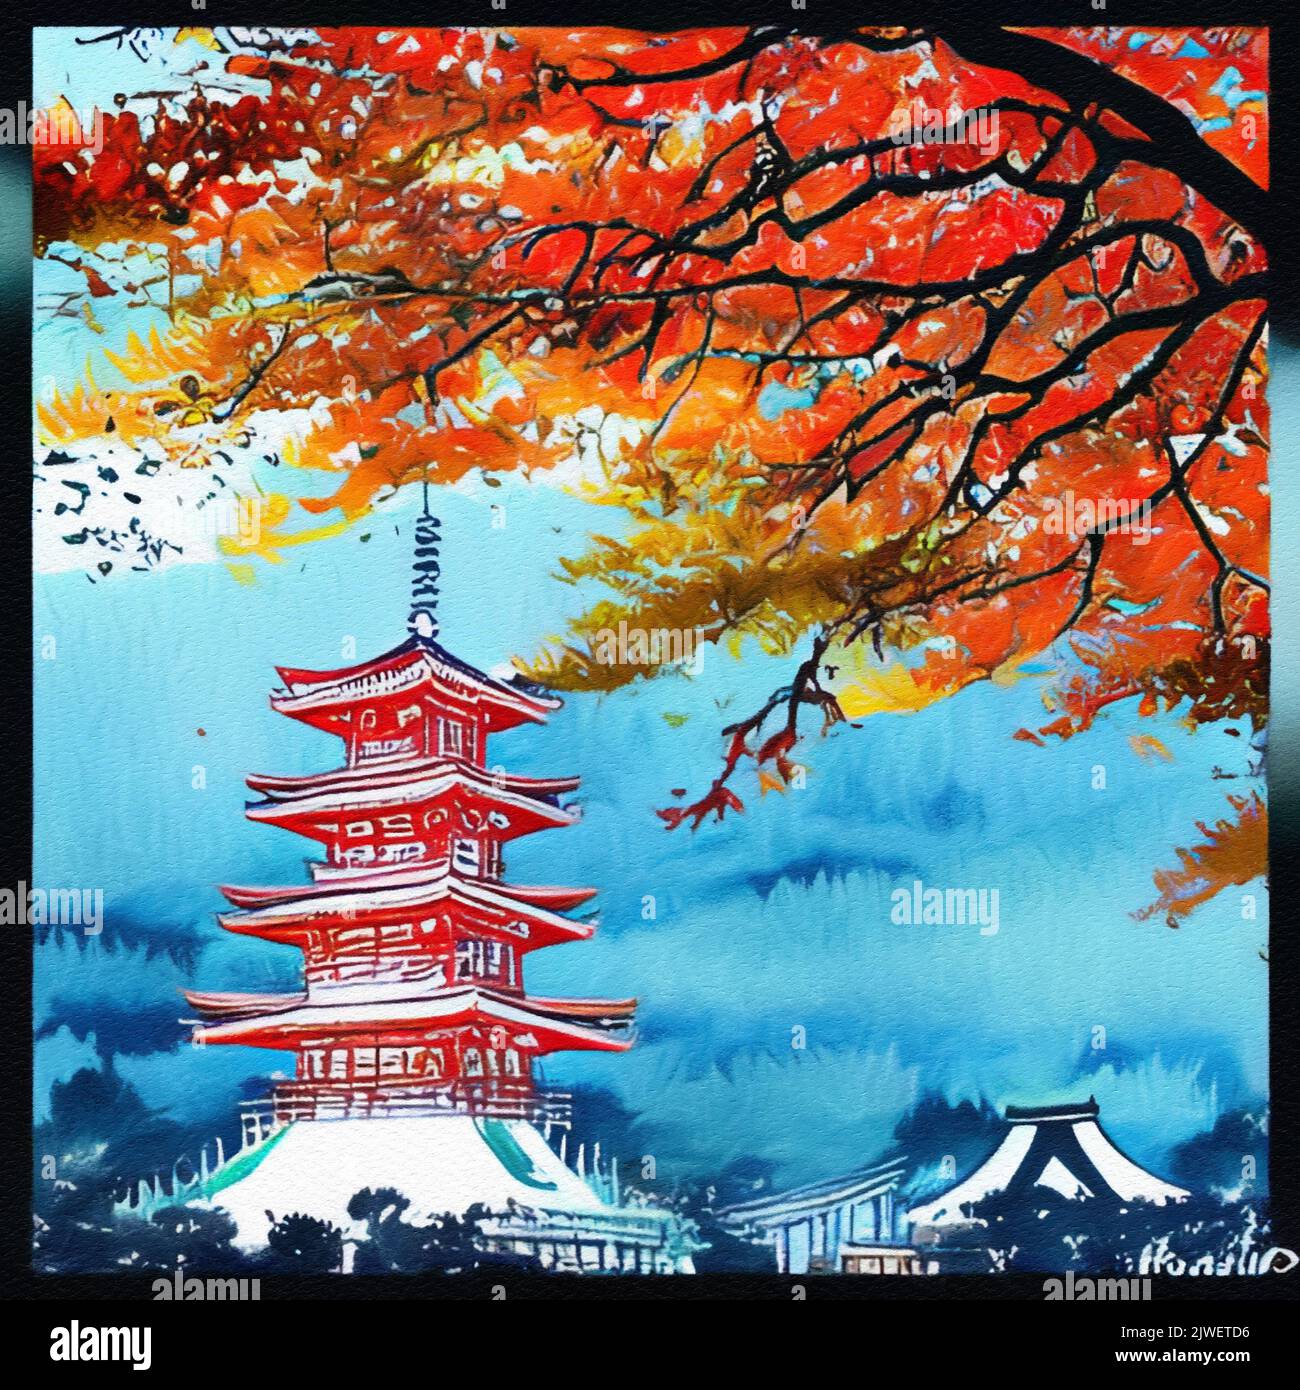 Japanese Architecture Watercolor  Architecture painting, Watercolor  landscape paintings, Watercolor architecture